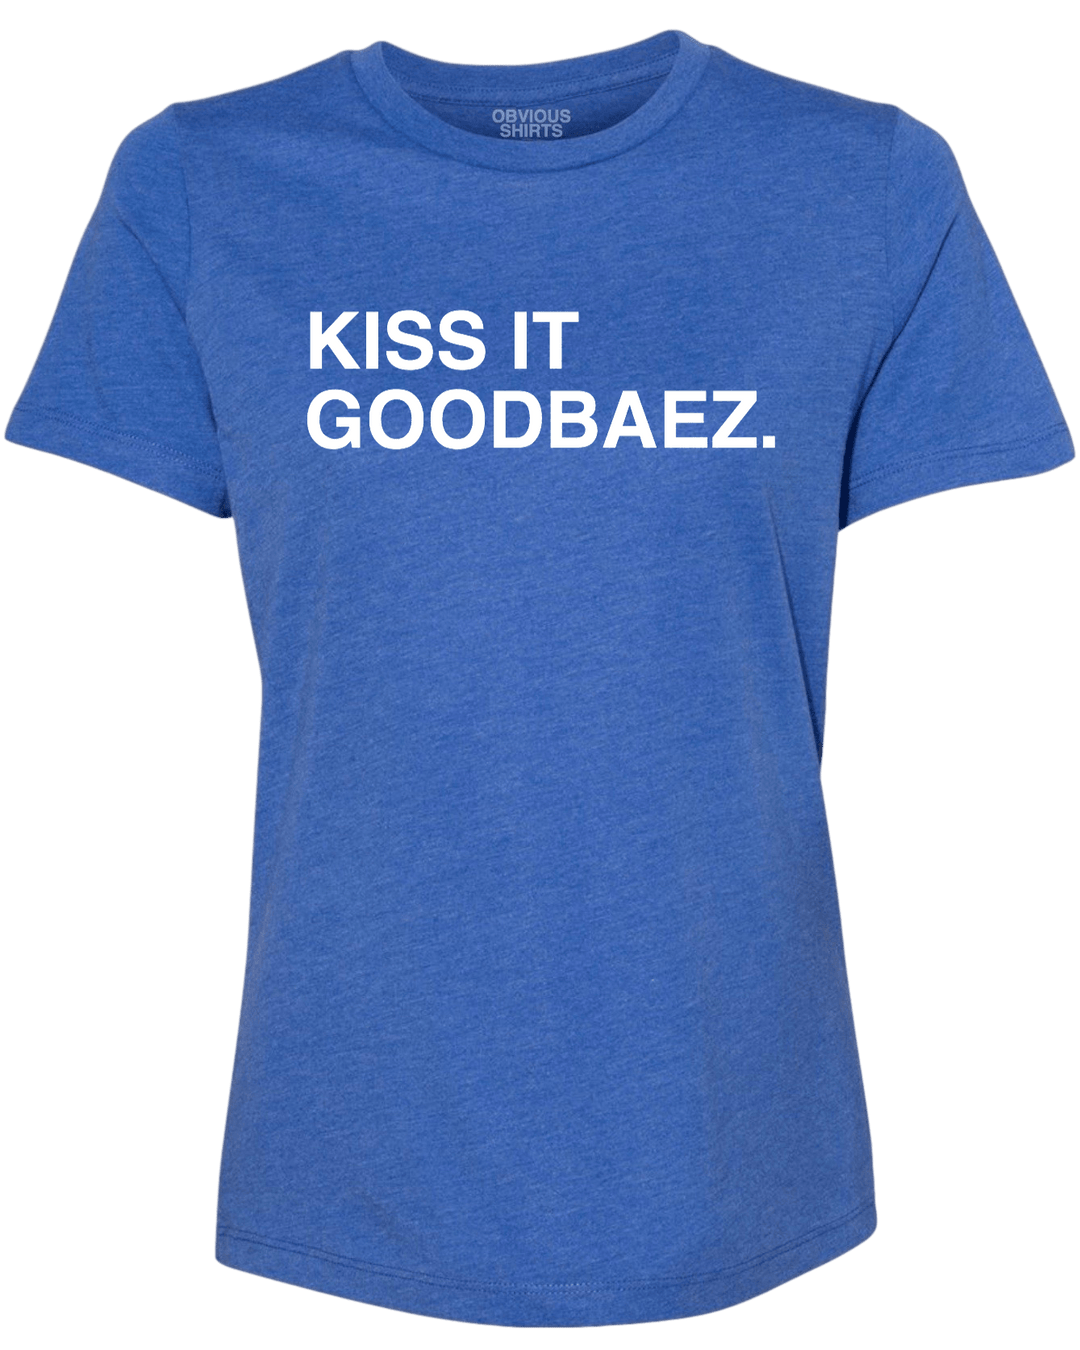 KISS IT GOODBAEZ. (WOMEN'S CREW) - OBVIOUS SHIRTS.